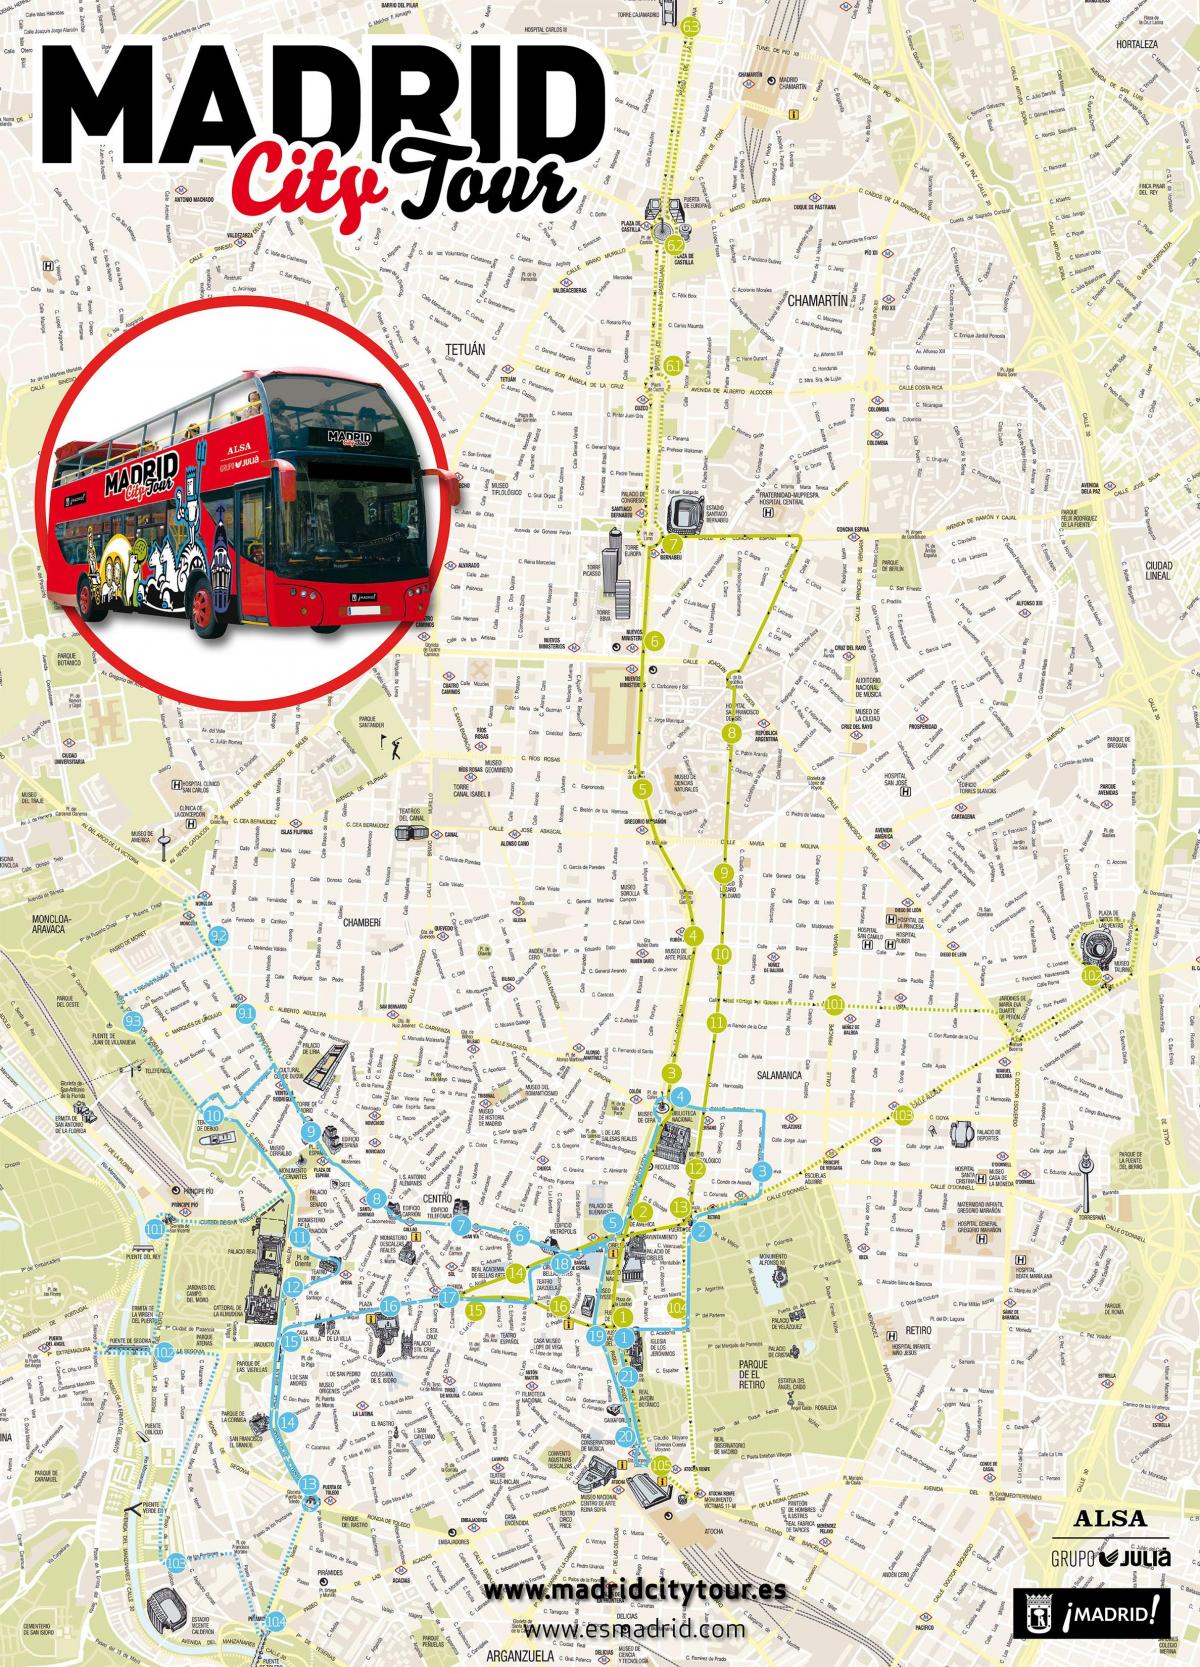 Madrid city tour bus mapa